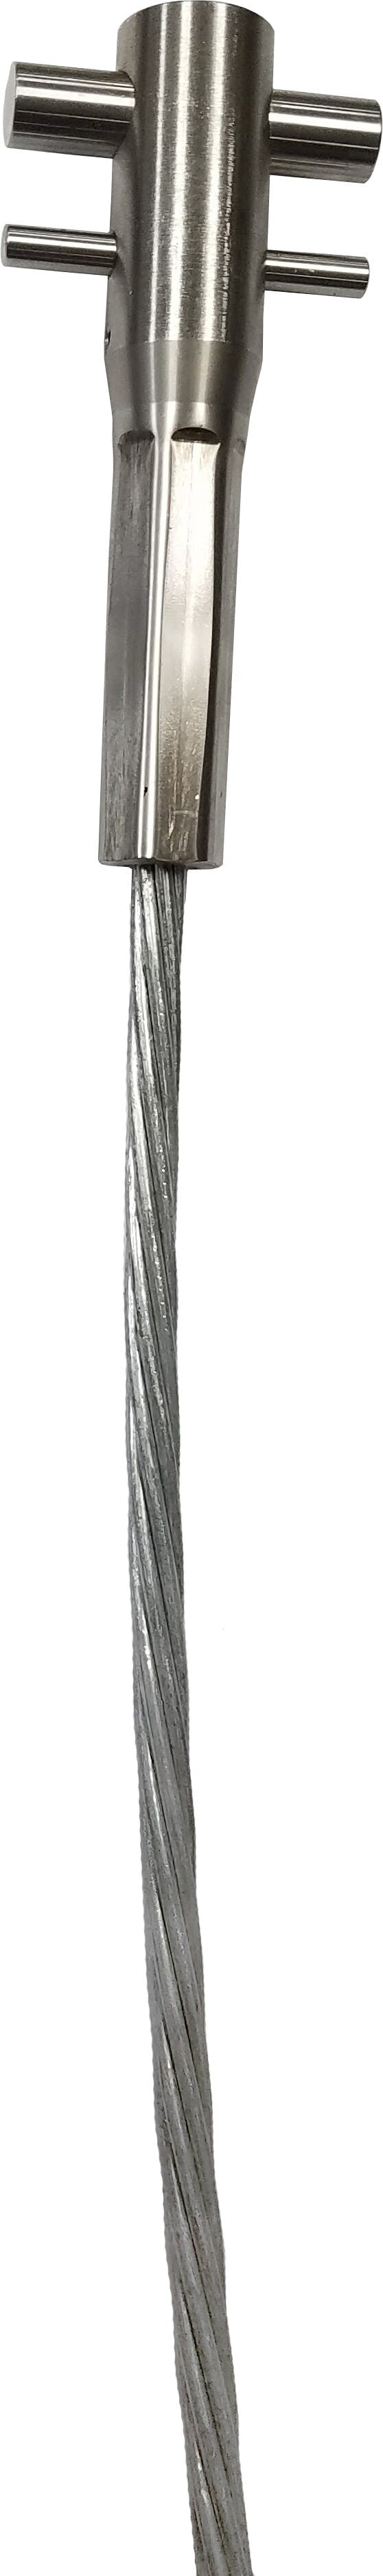 3M™ DBI-SALA® Lad-Saf™ Swaged Cable 6115002, 3/8 Inch, Galvanized Steel, 6m_0